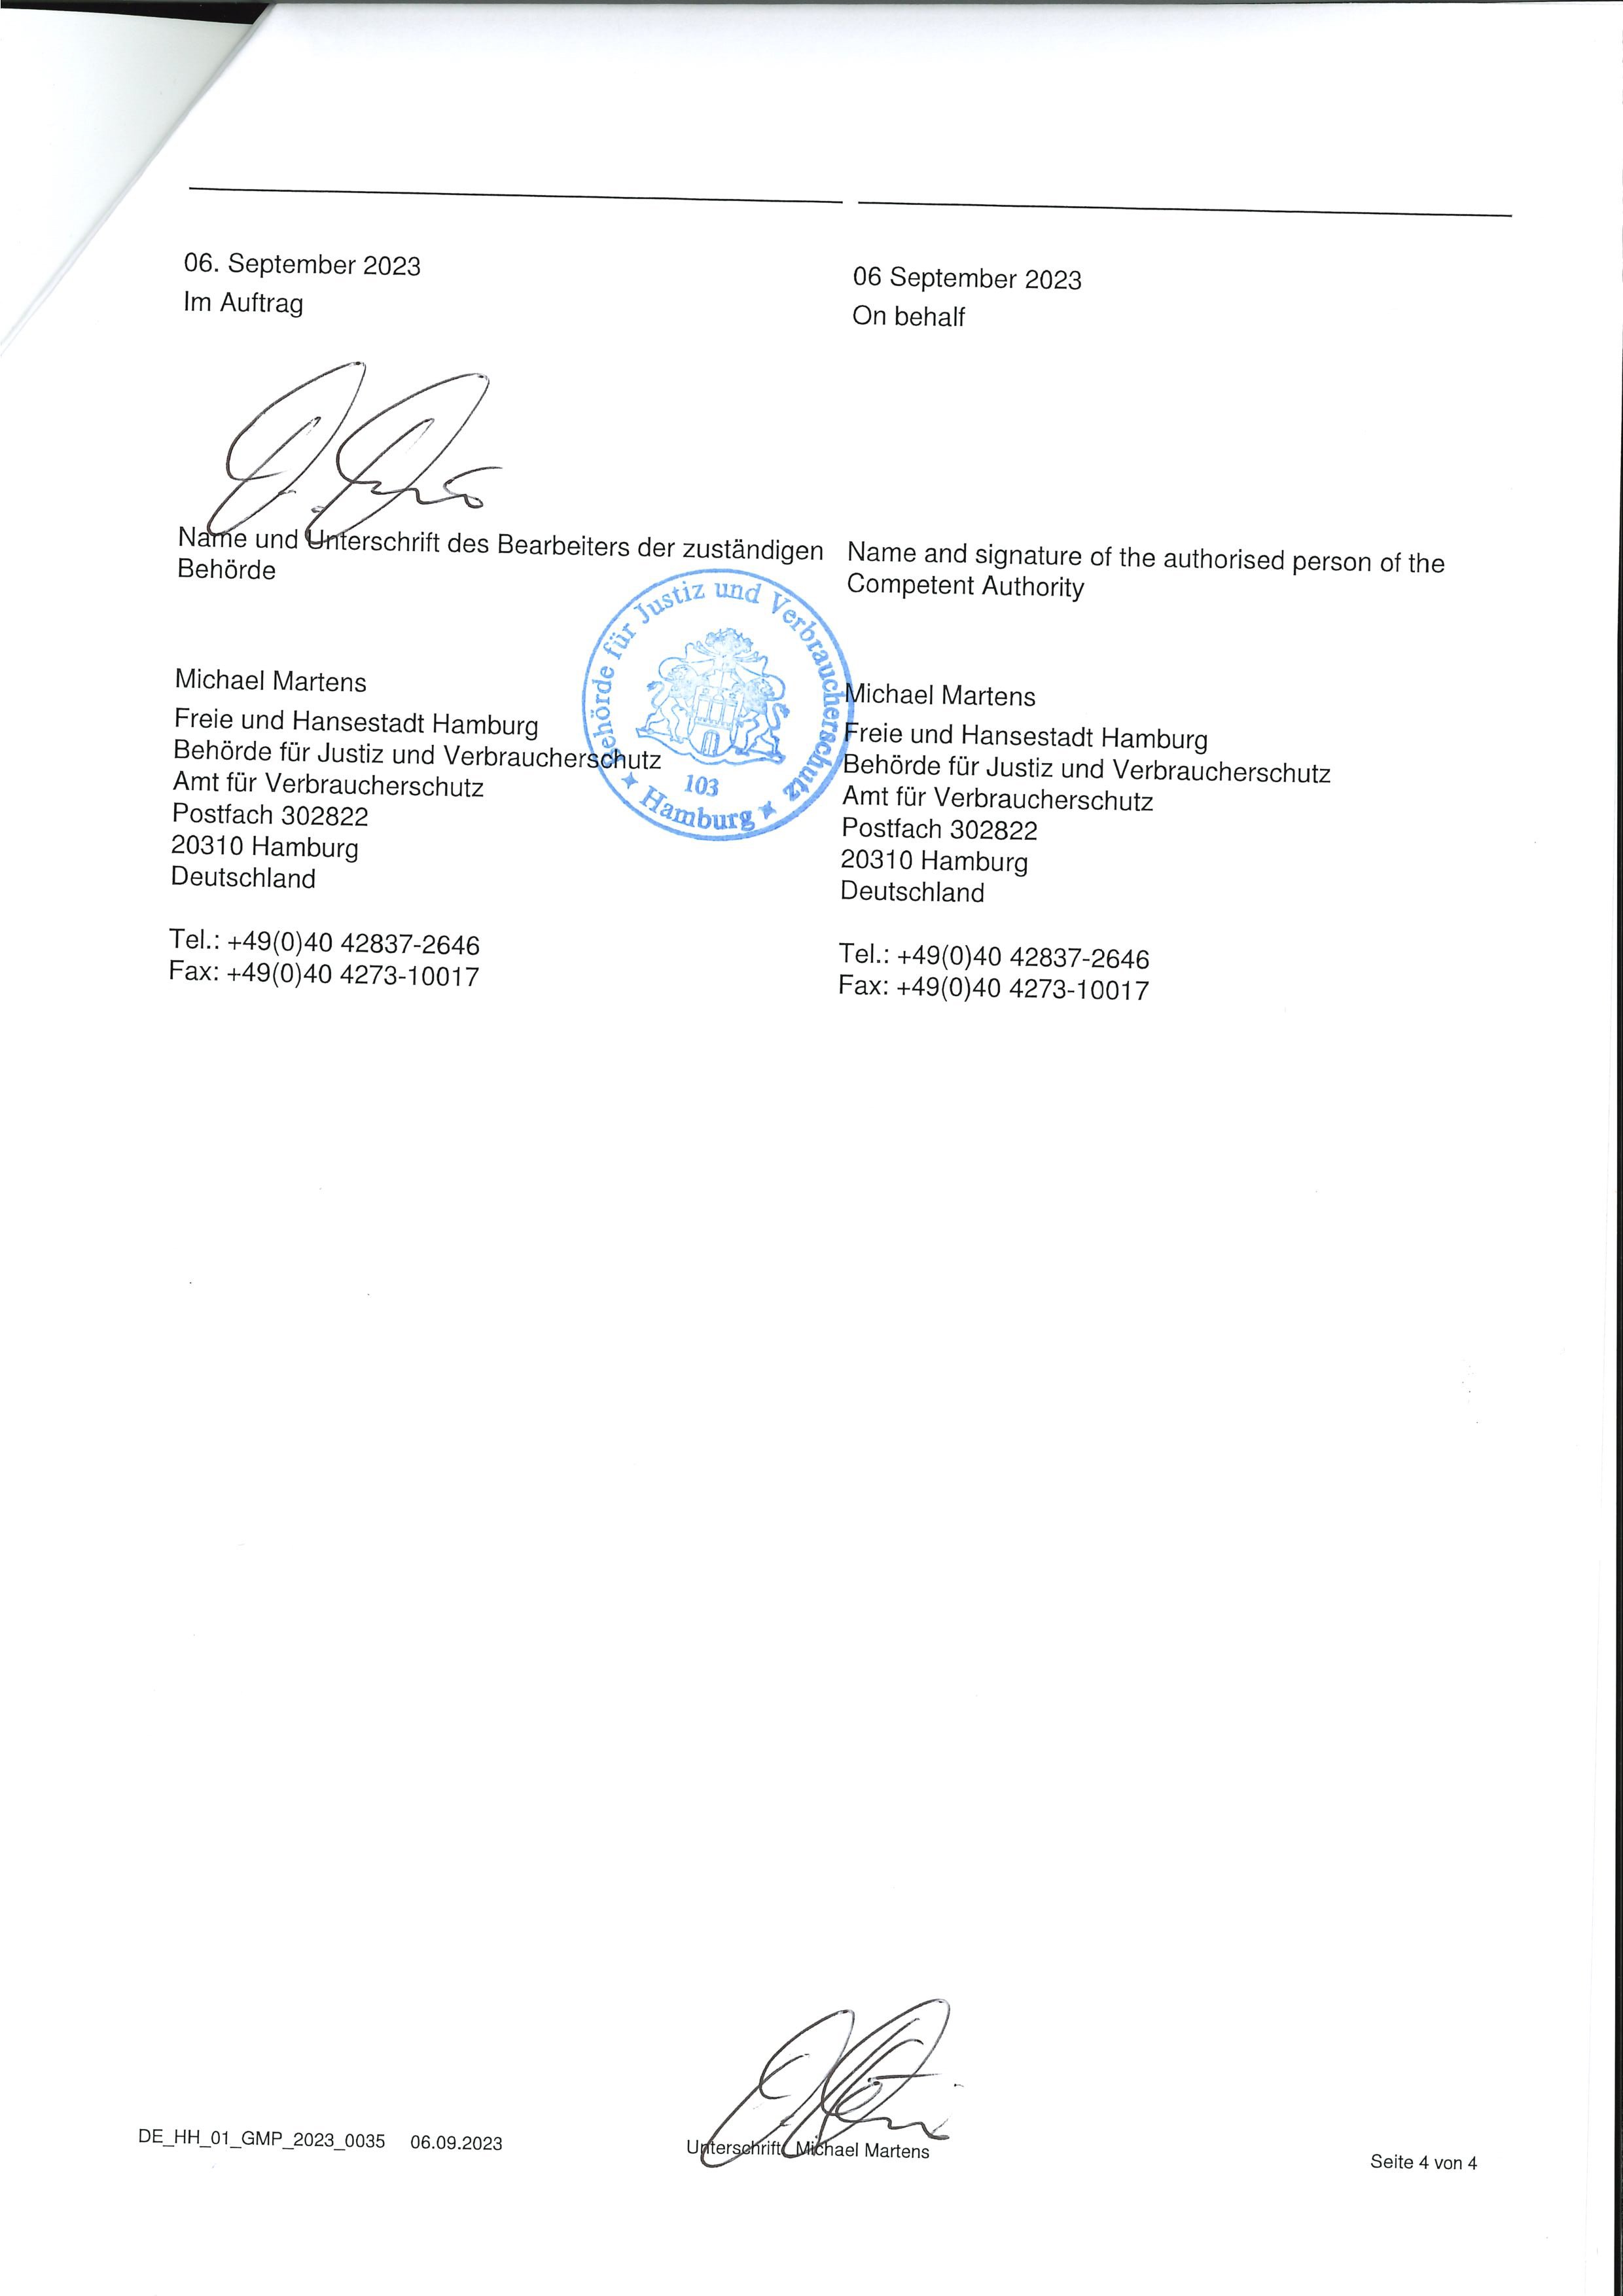 01 EU-GMP certificate Chondroitin sulfate valid until 2026-06-08-4.jpg